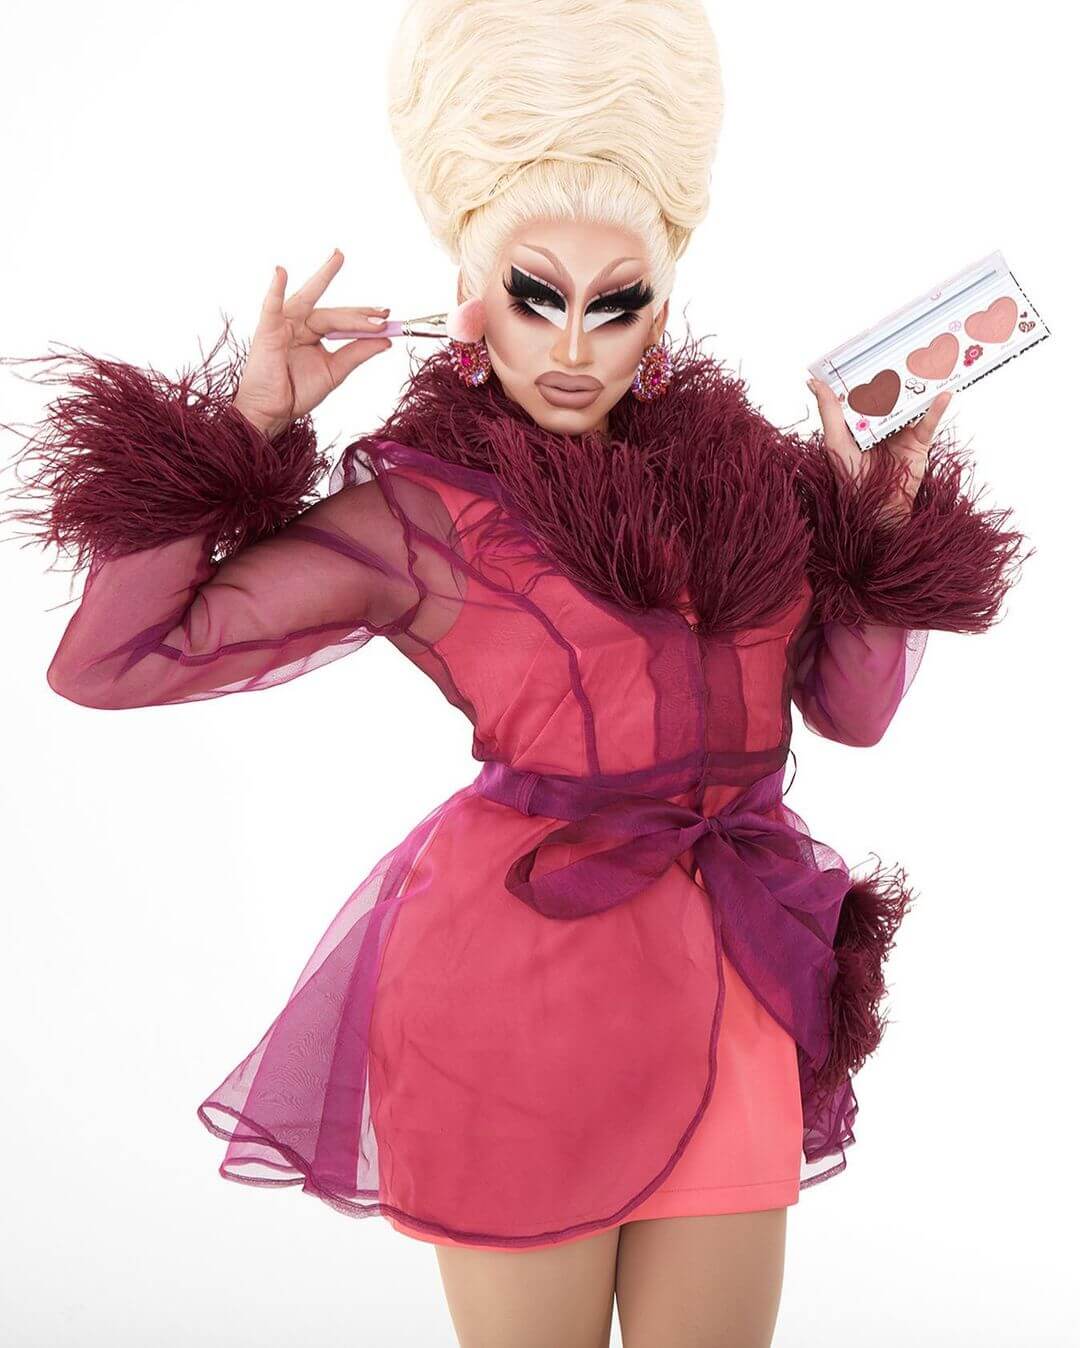 trixie mattel, drag queen famose